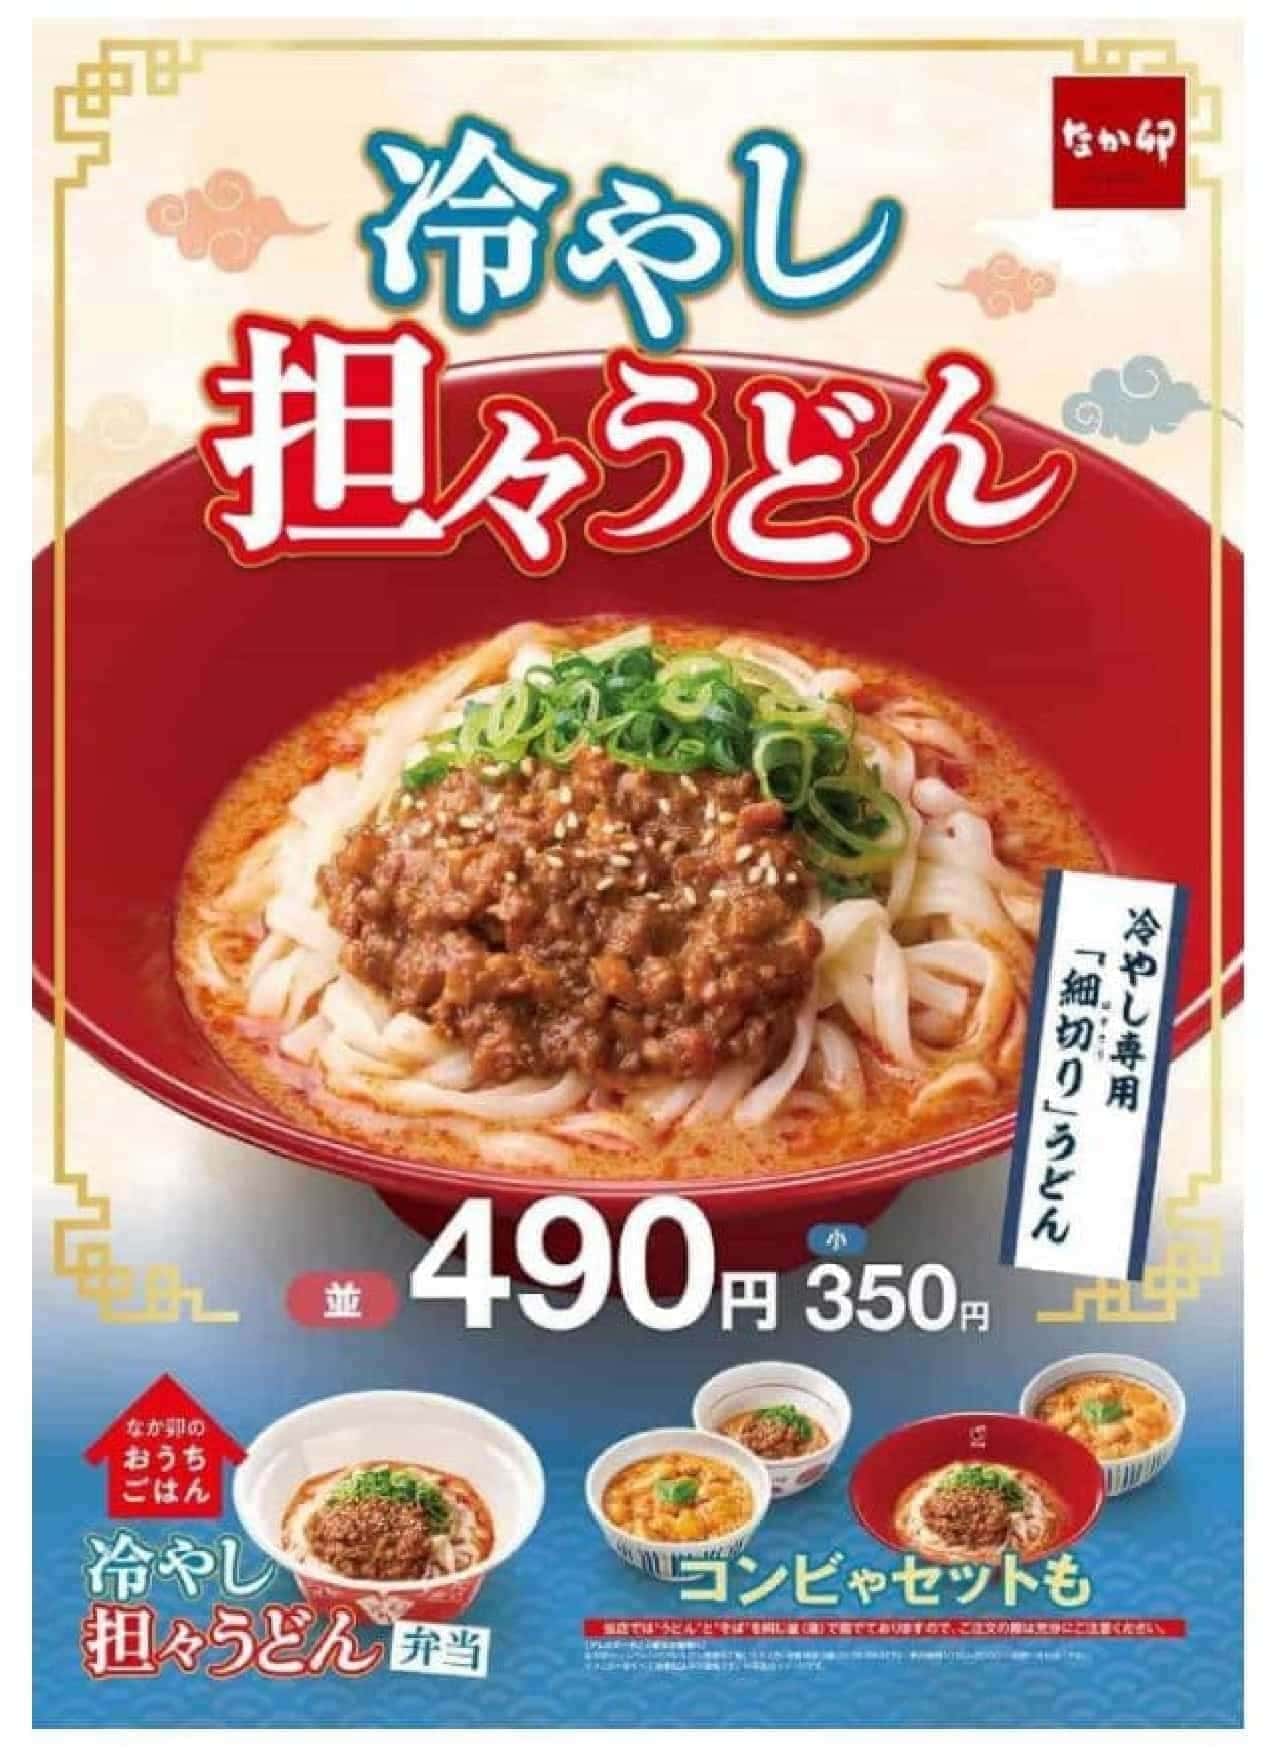 Nakau "Chilled udon noodles